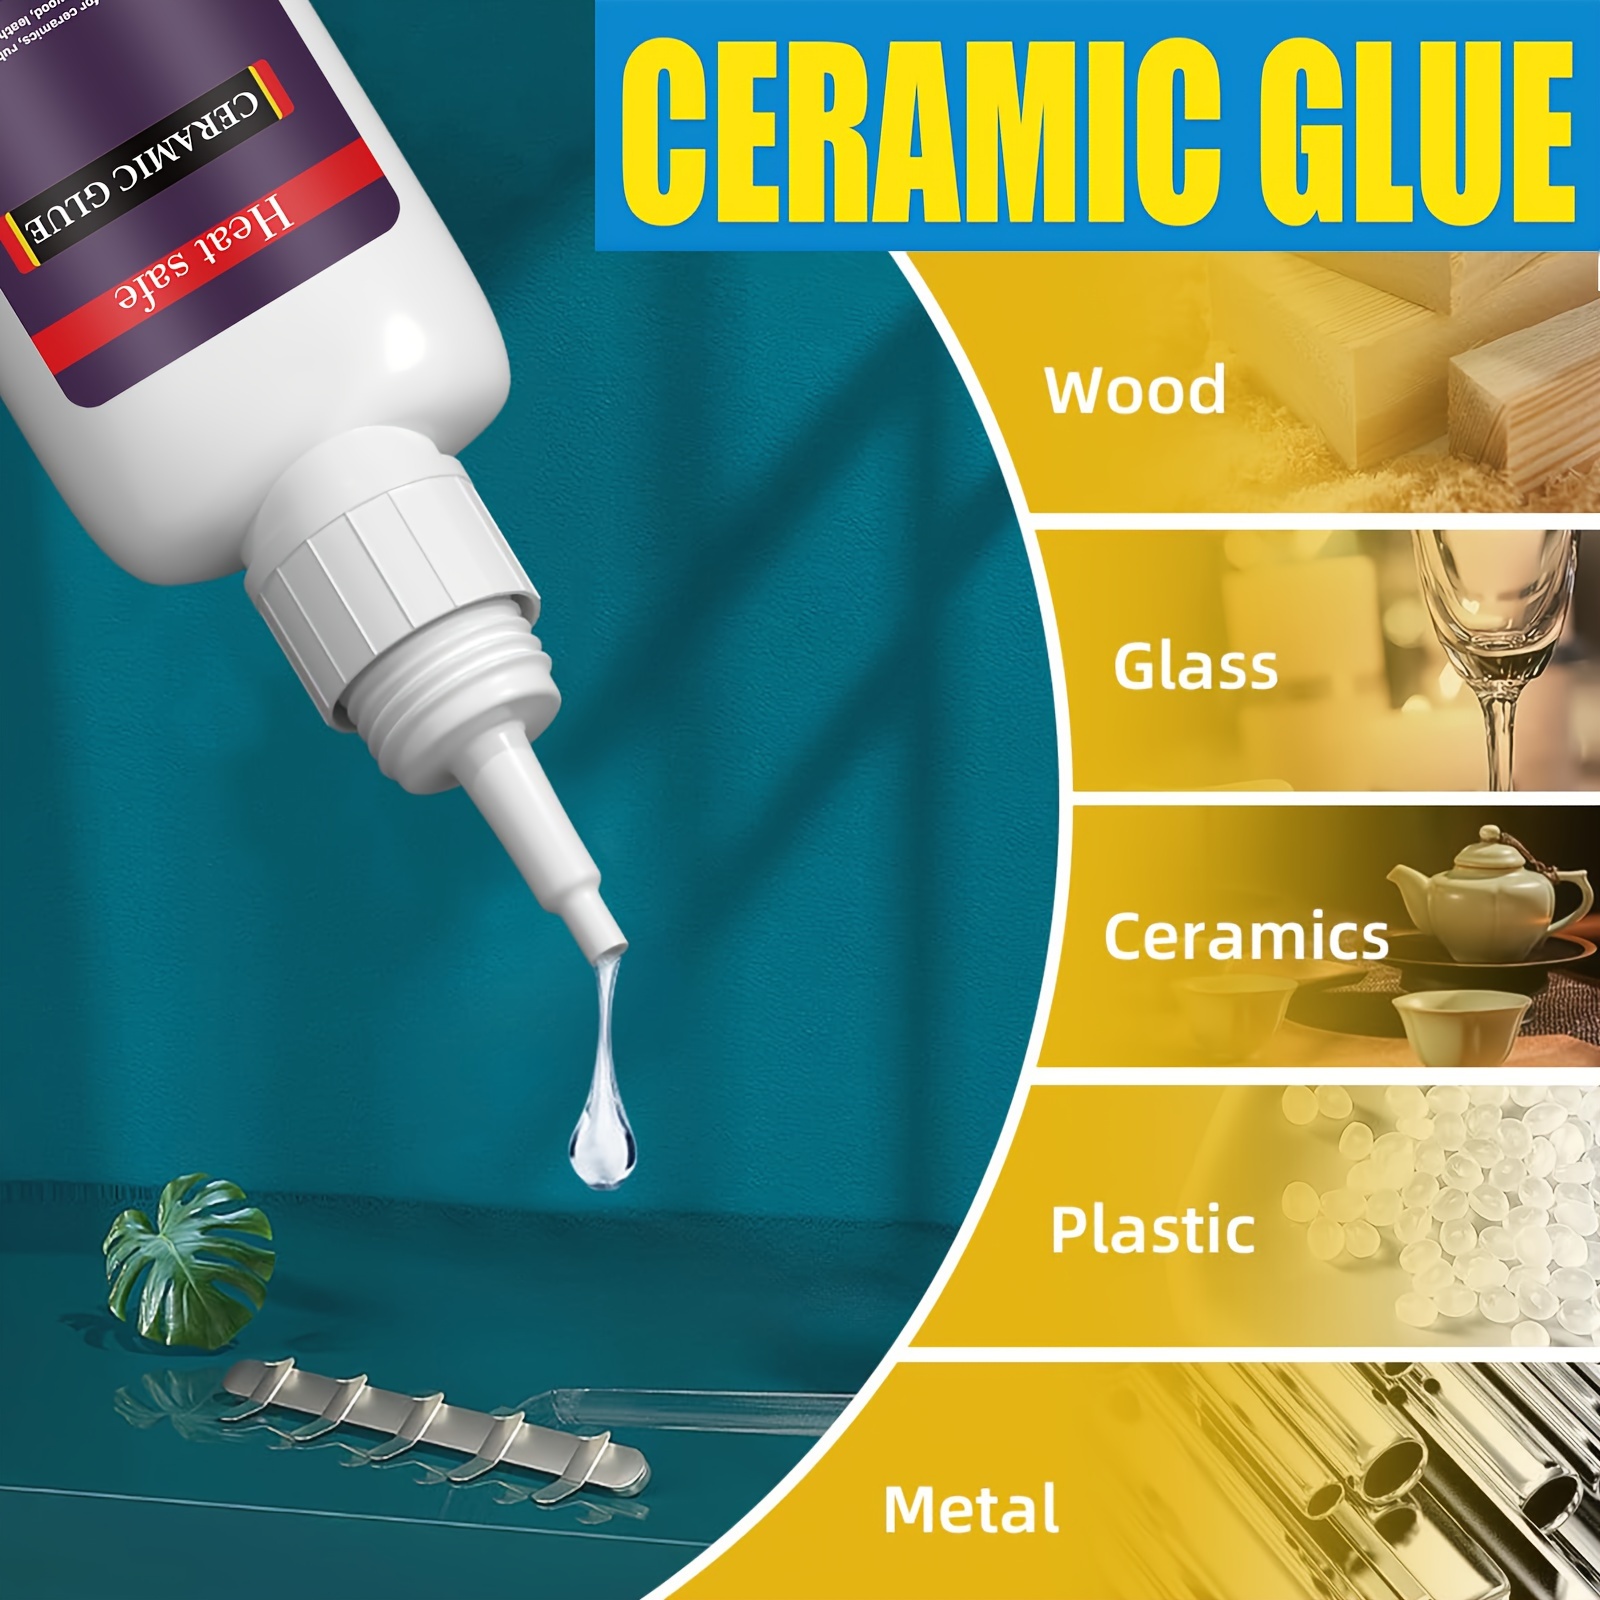  Food Safe Ceramic Glue